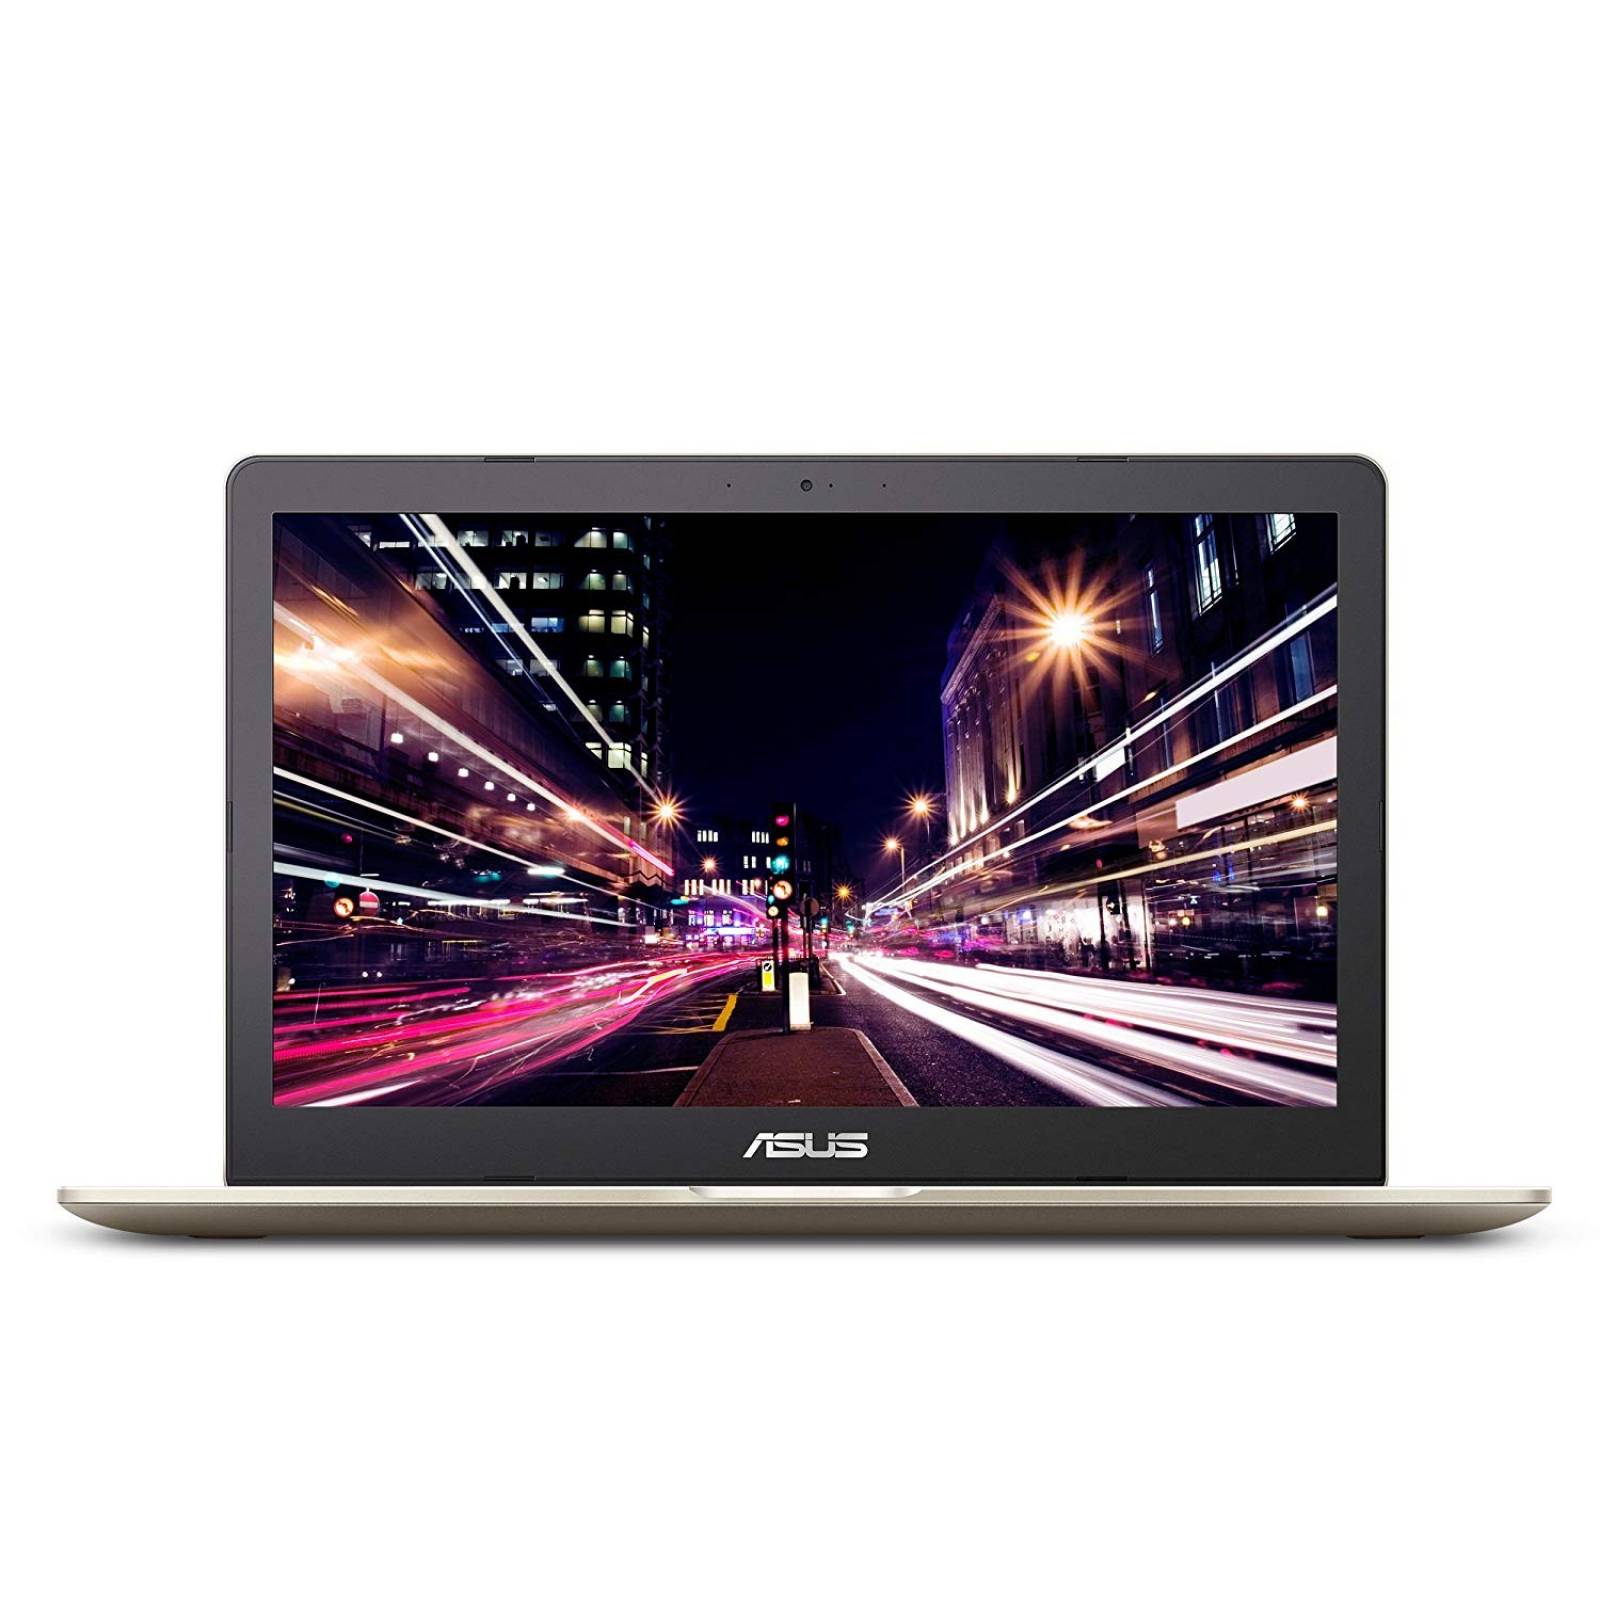 Laptop Gamer Asus VivoBook Pro 15 i7 256GB 1TB GTX1050